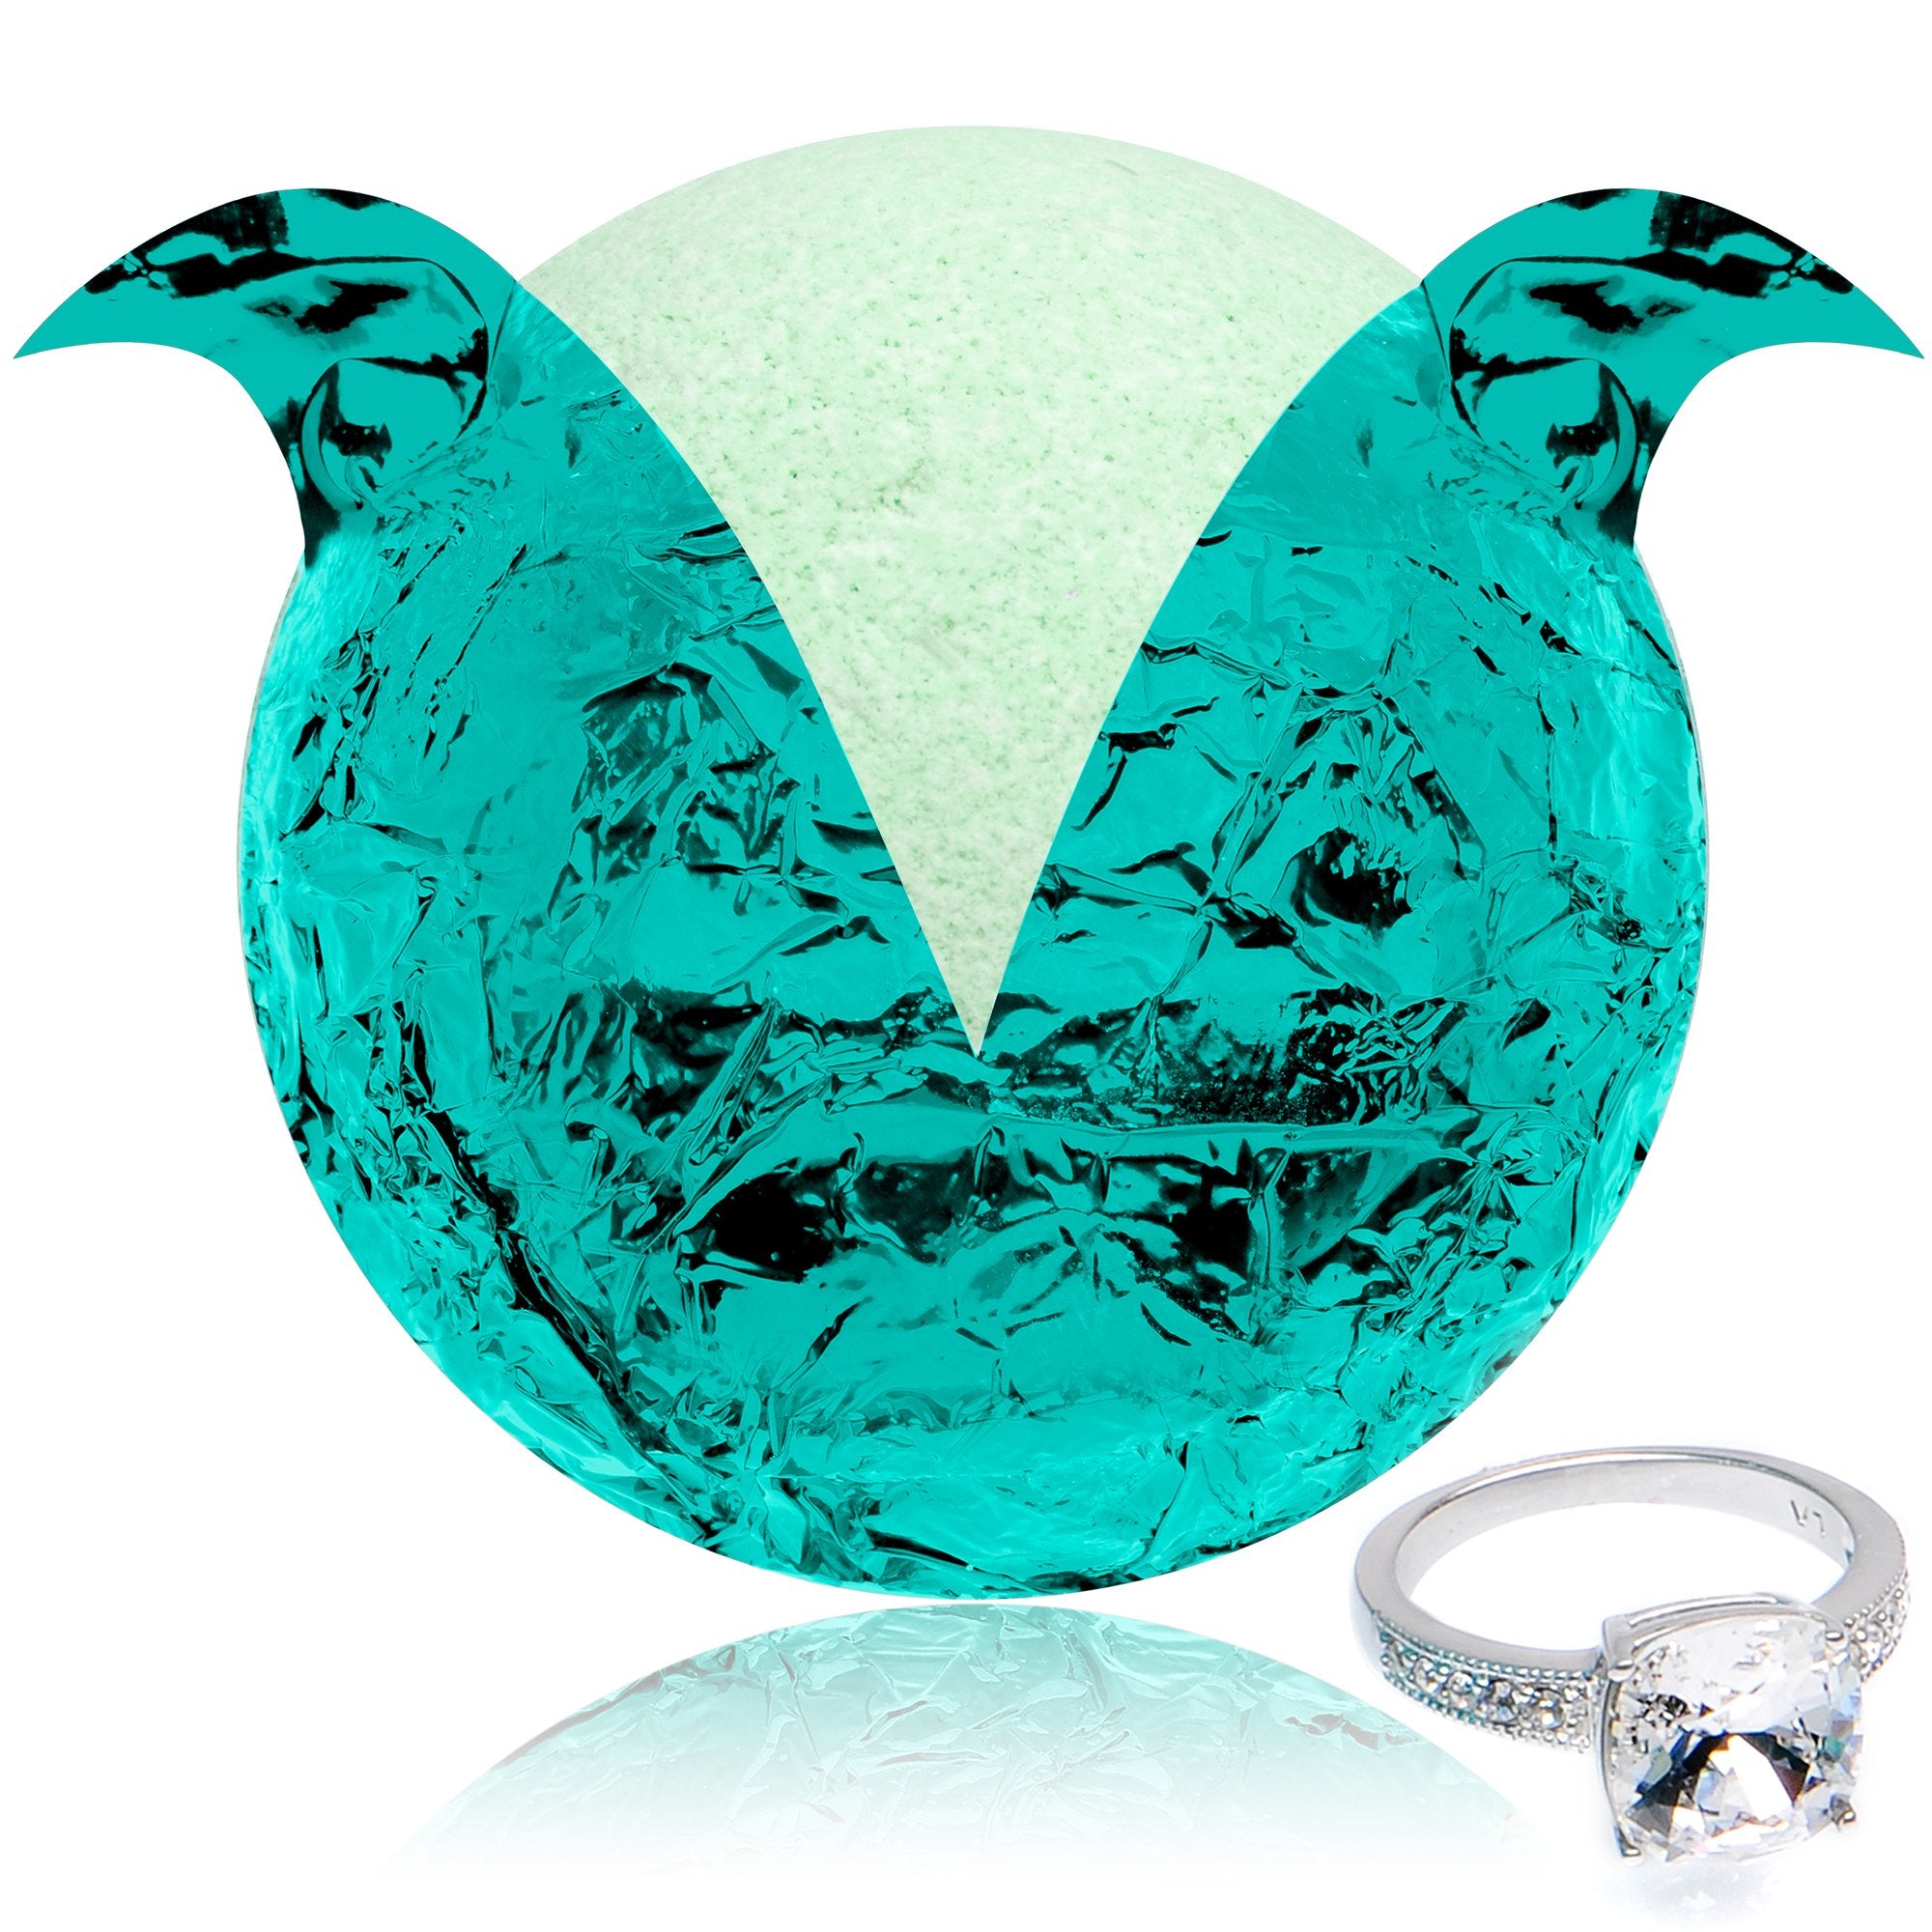 Mermaid Daydream Bath Bomb with Jewelry Ring Inside